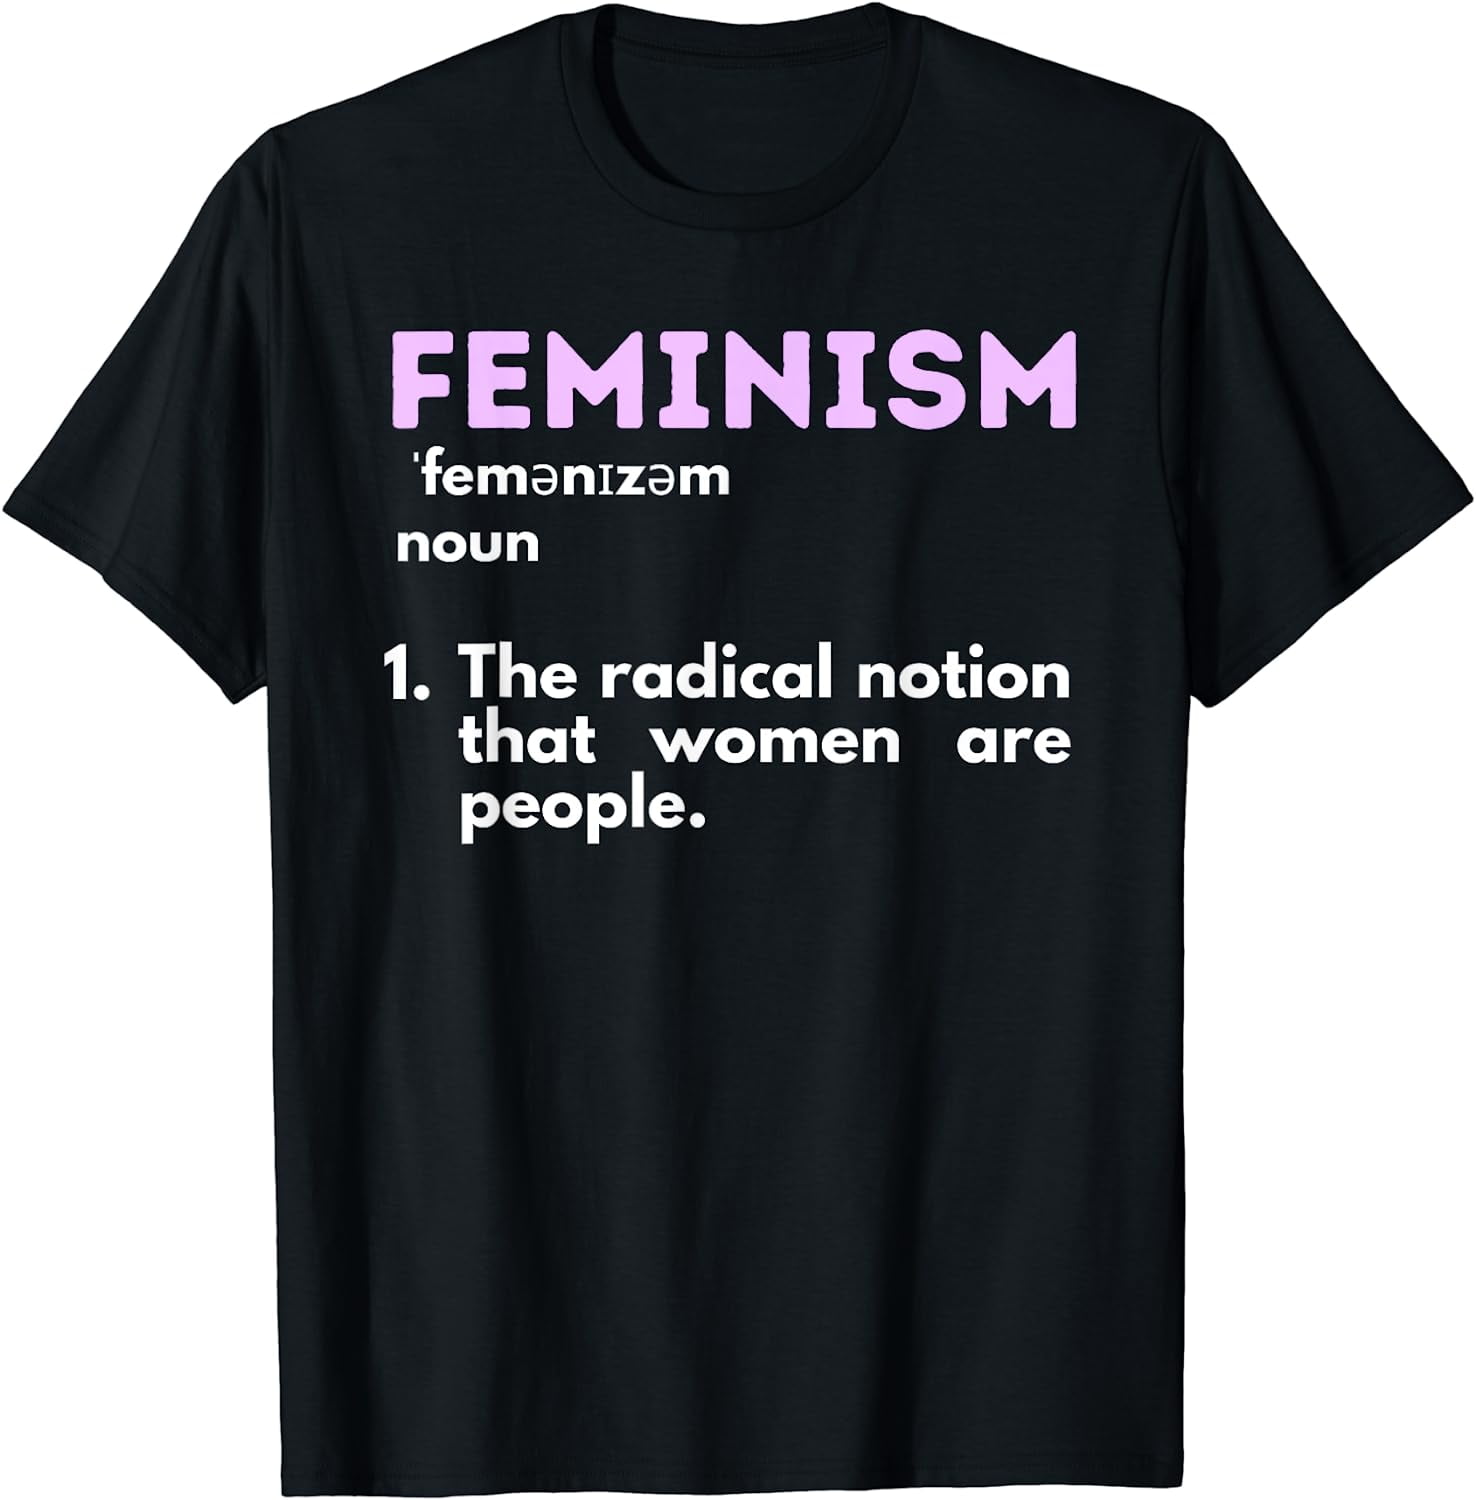 Feminism Definition Feminist Empowered Women Women's Rights T-Shirt ...